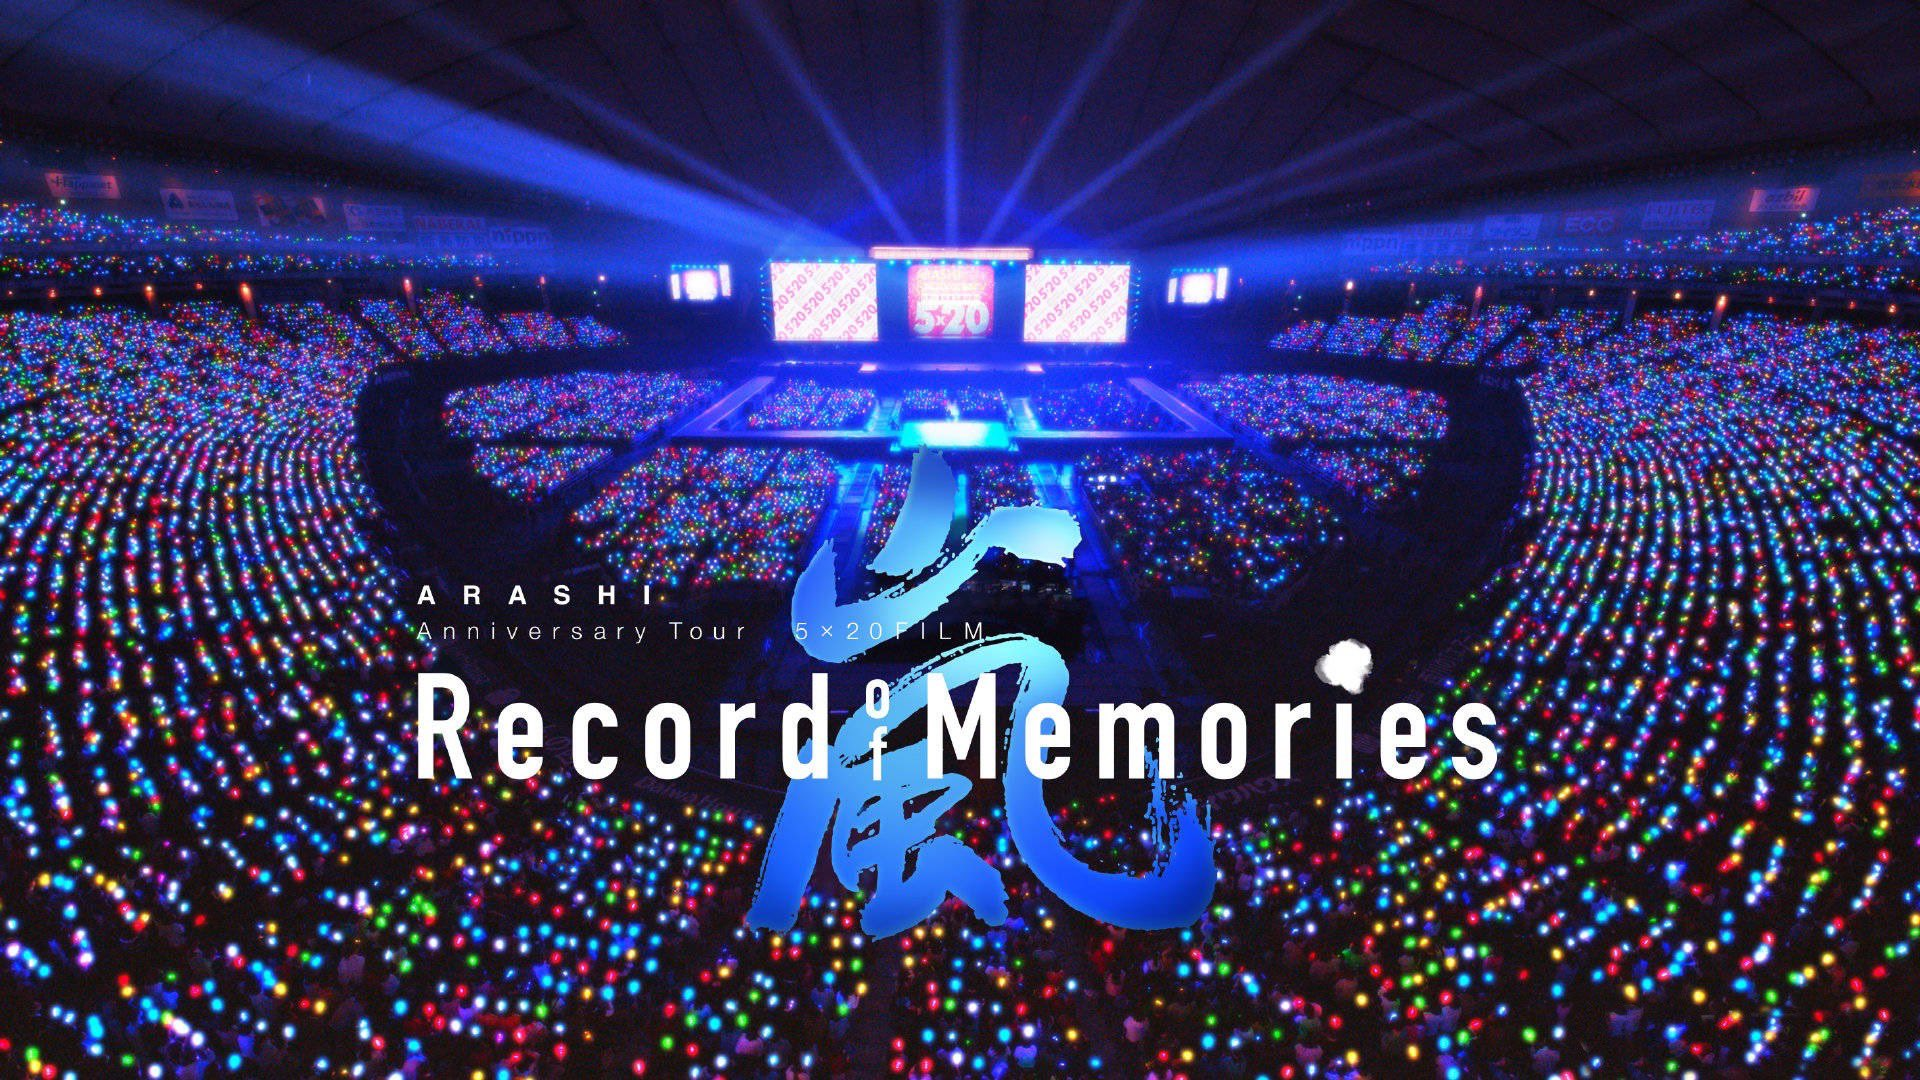 ❤️鈴果(*´꒳`* )💛 說《ARASHI Anniversary Tour 5×20 FILM “Record